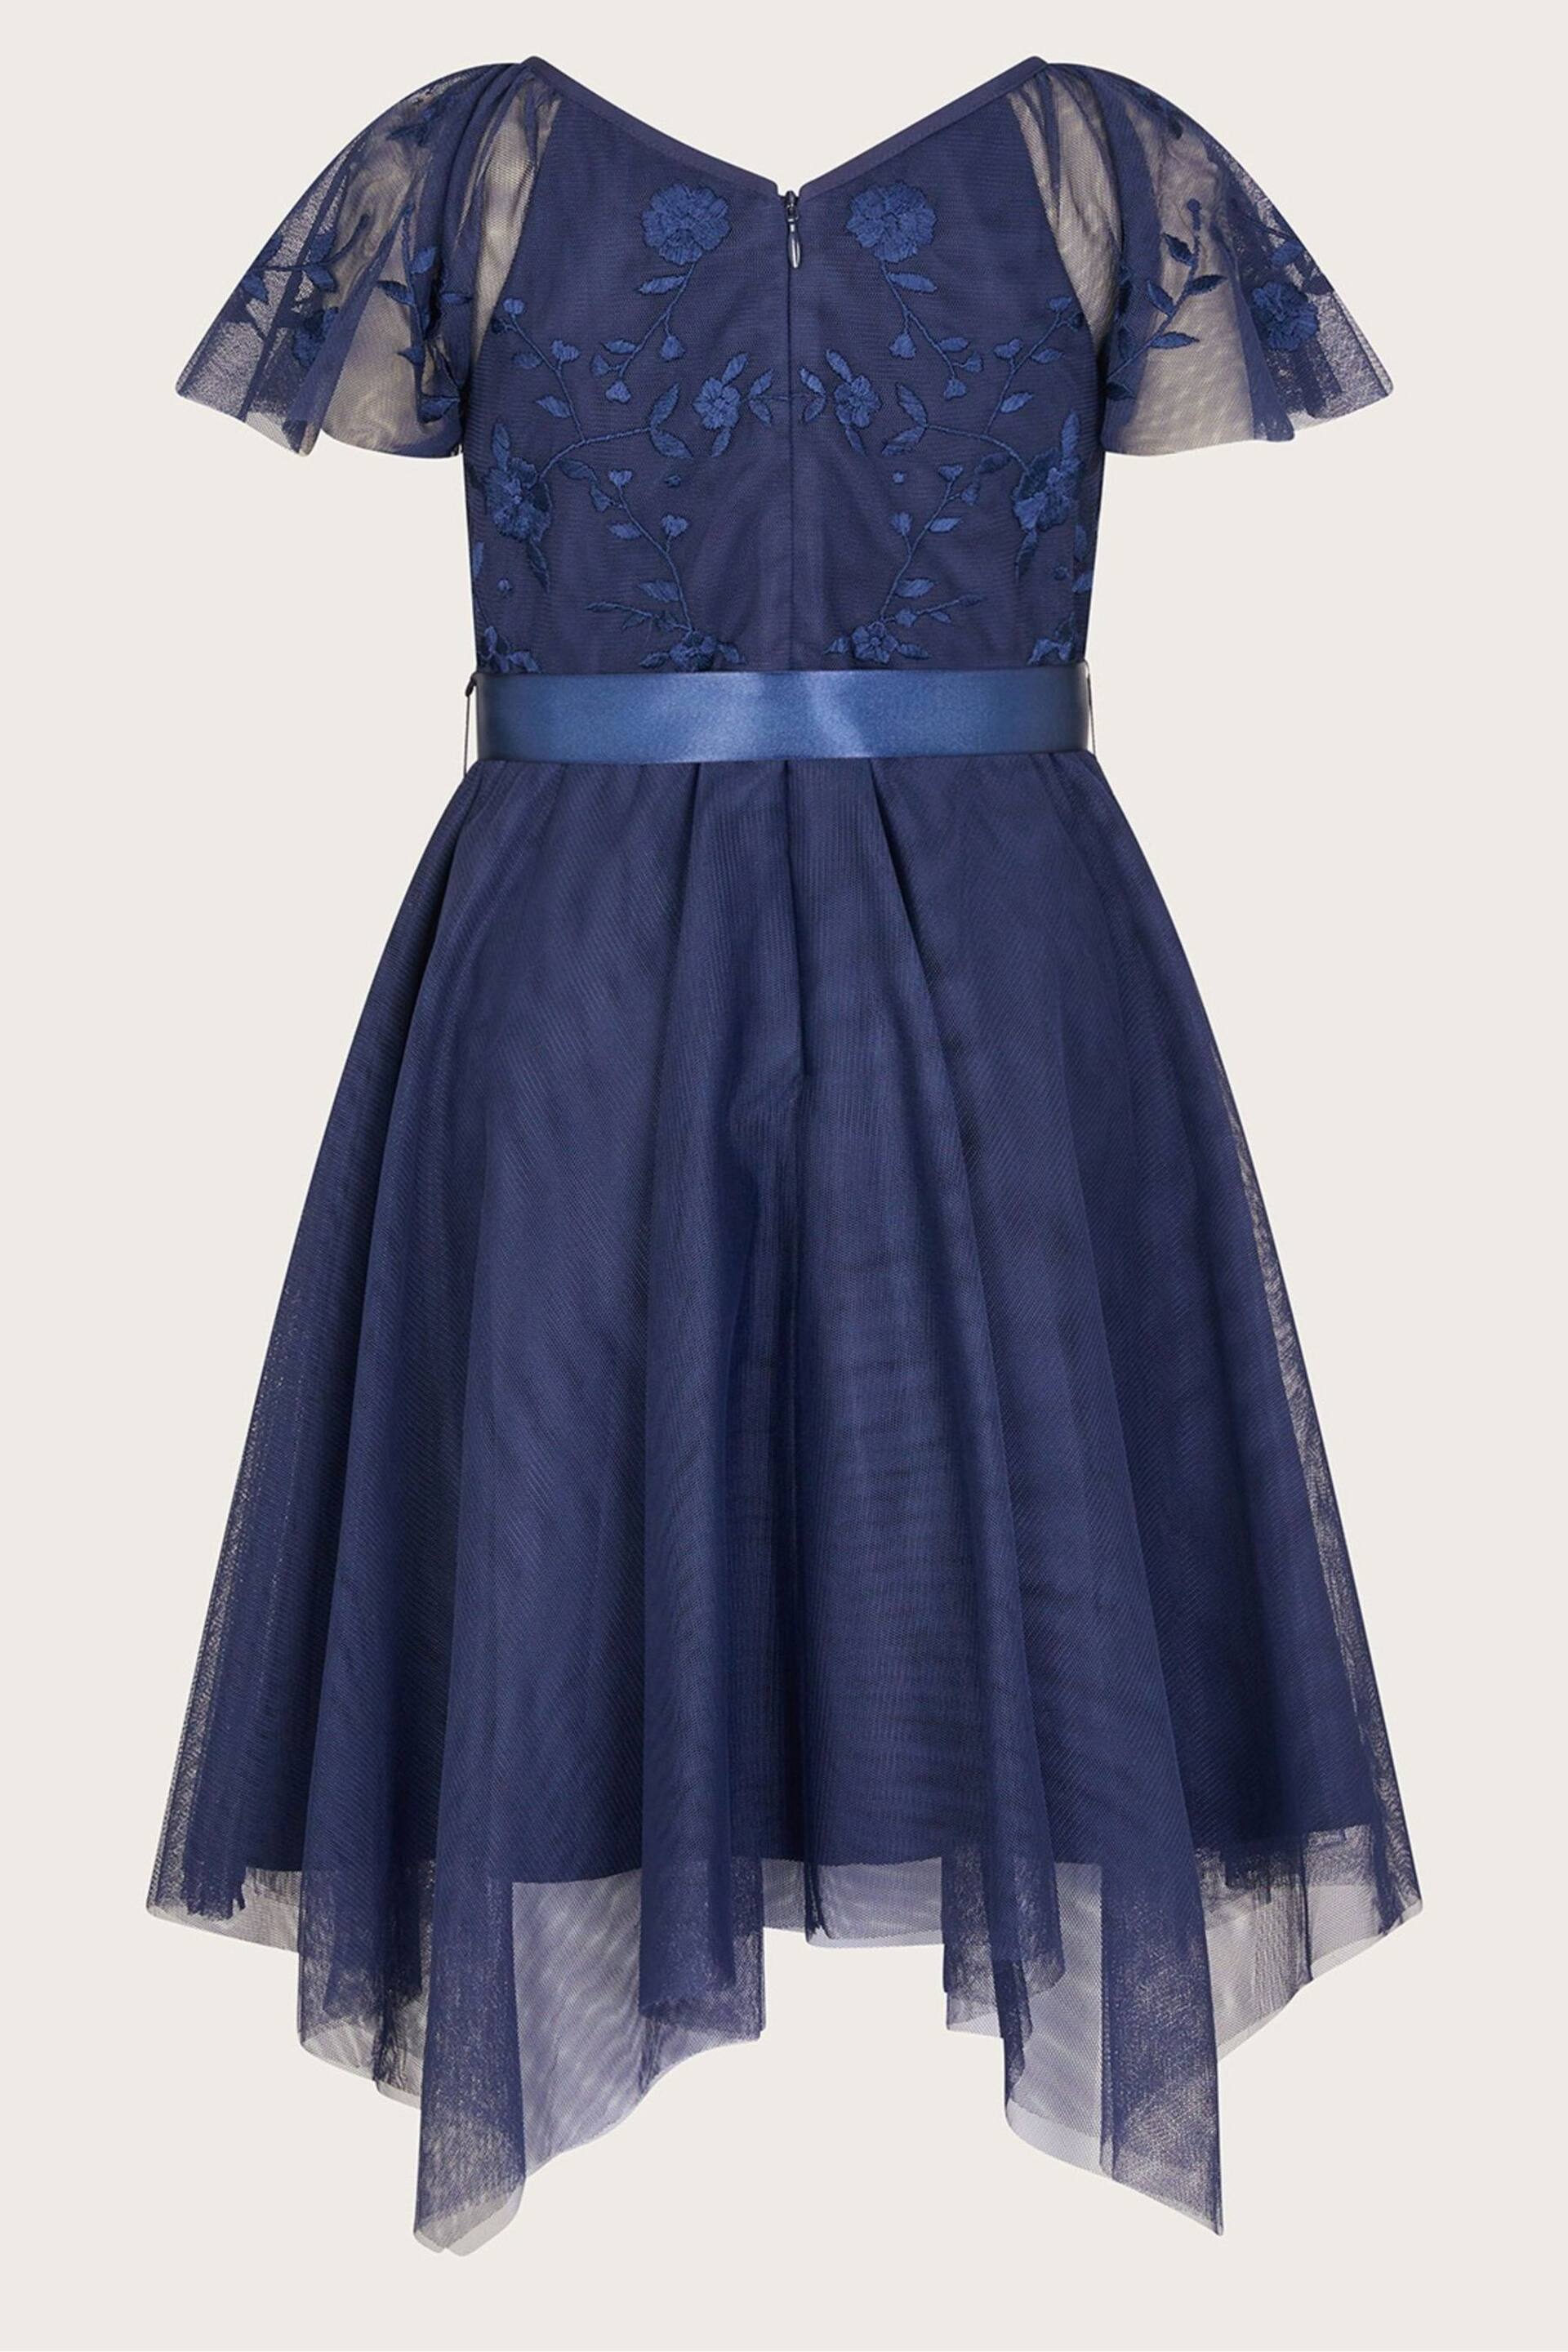 Monsoon Blue Amelia Embroidered Dress - Image 2 of 3